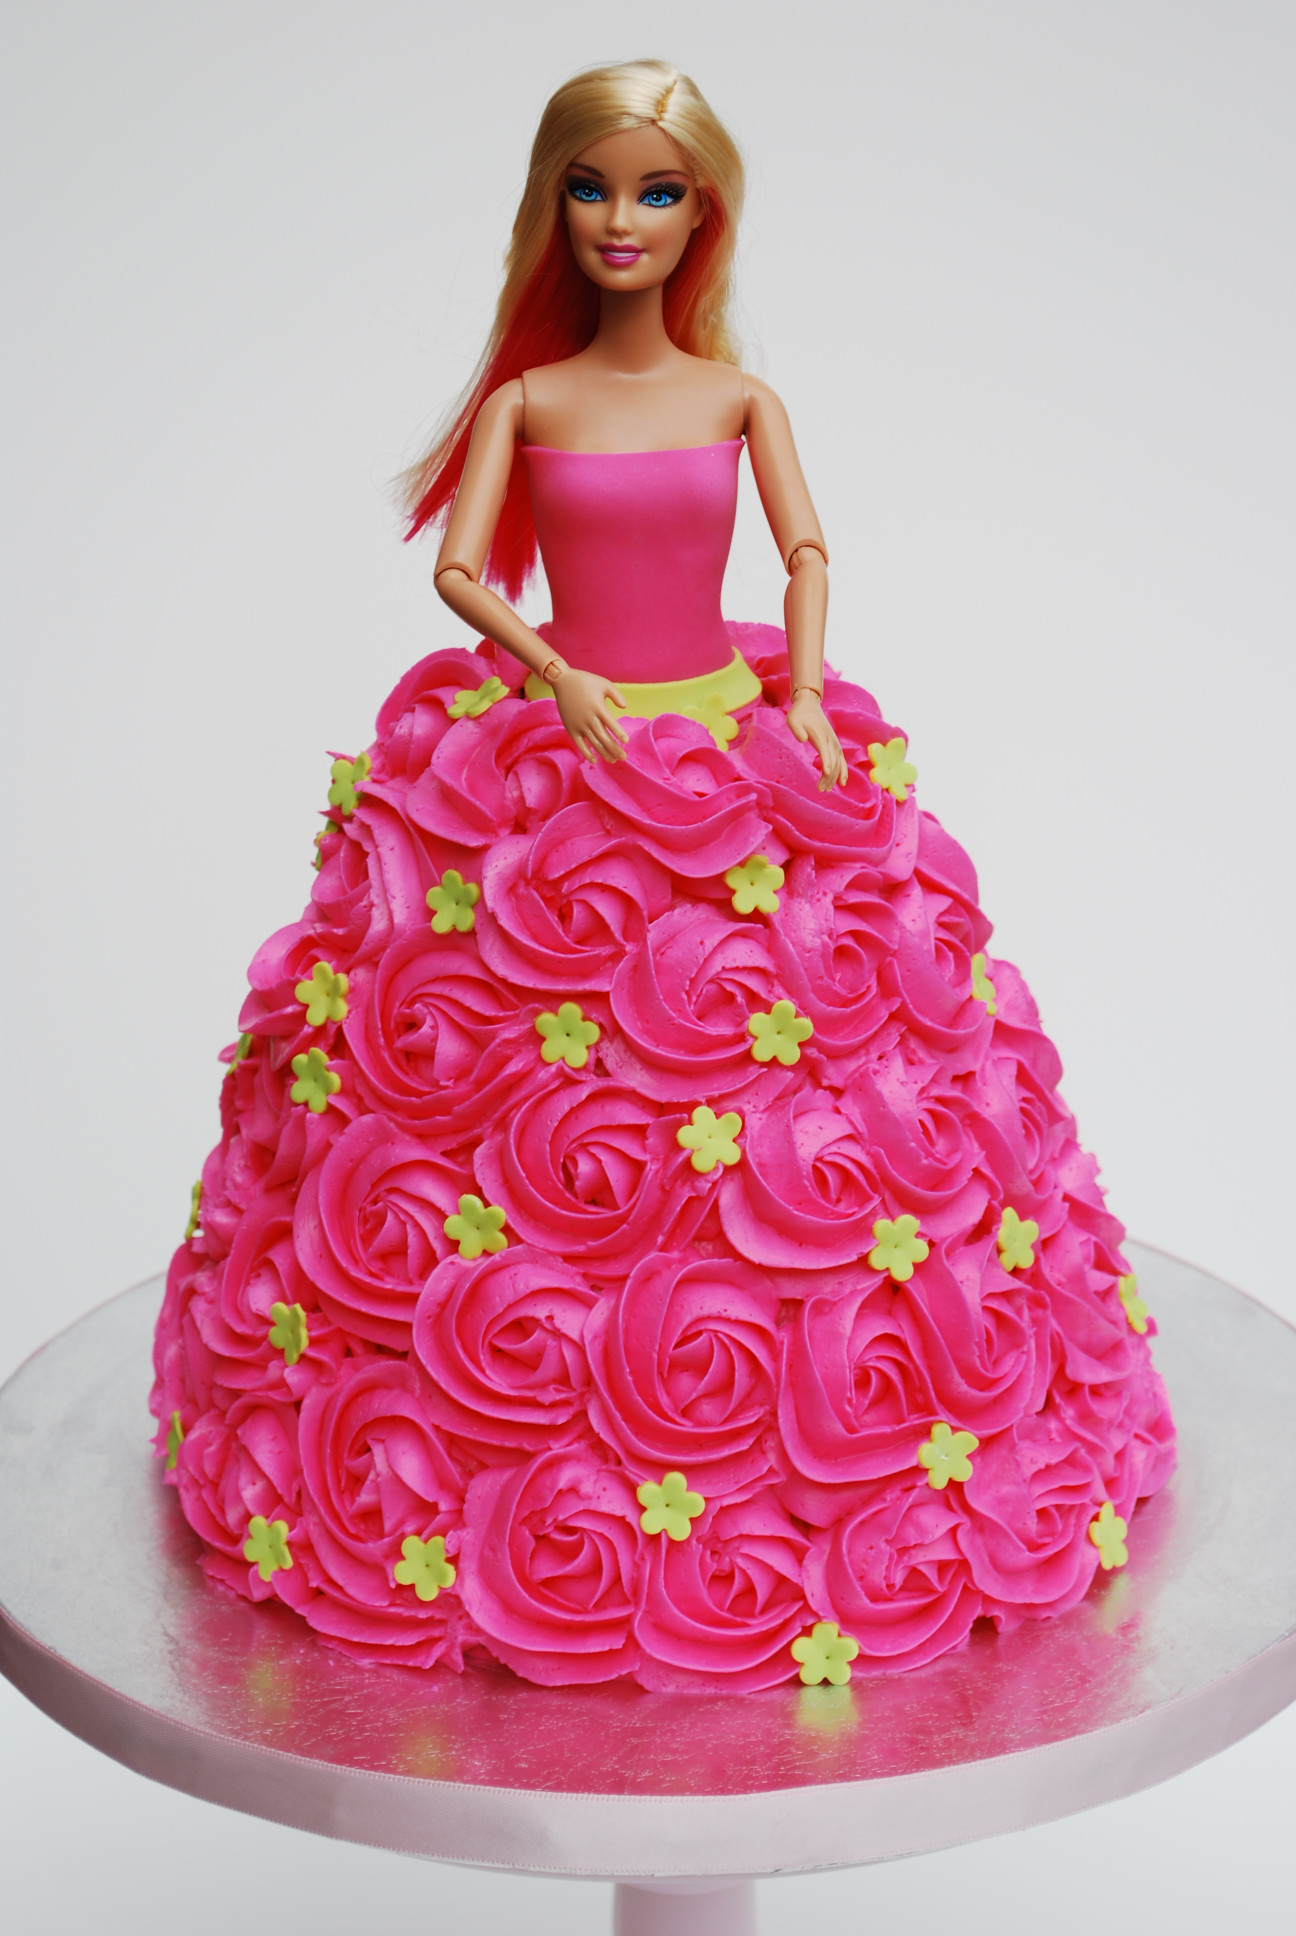 Barbie Birthday Cake Inspirational Pink Rosette Barbie Cake